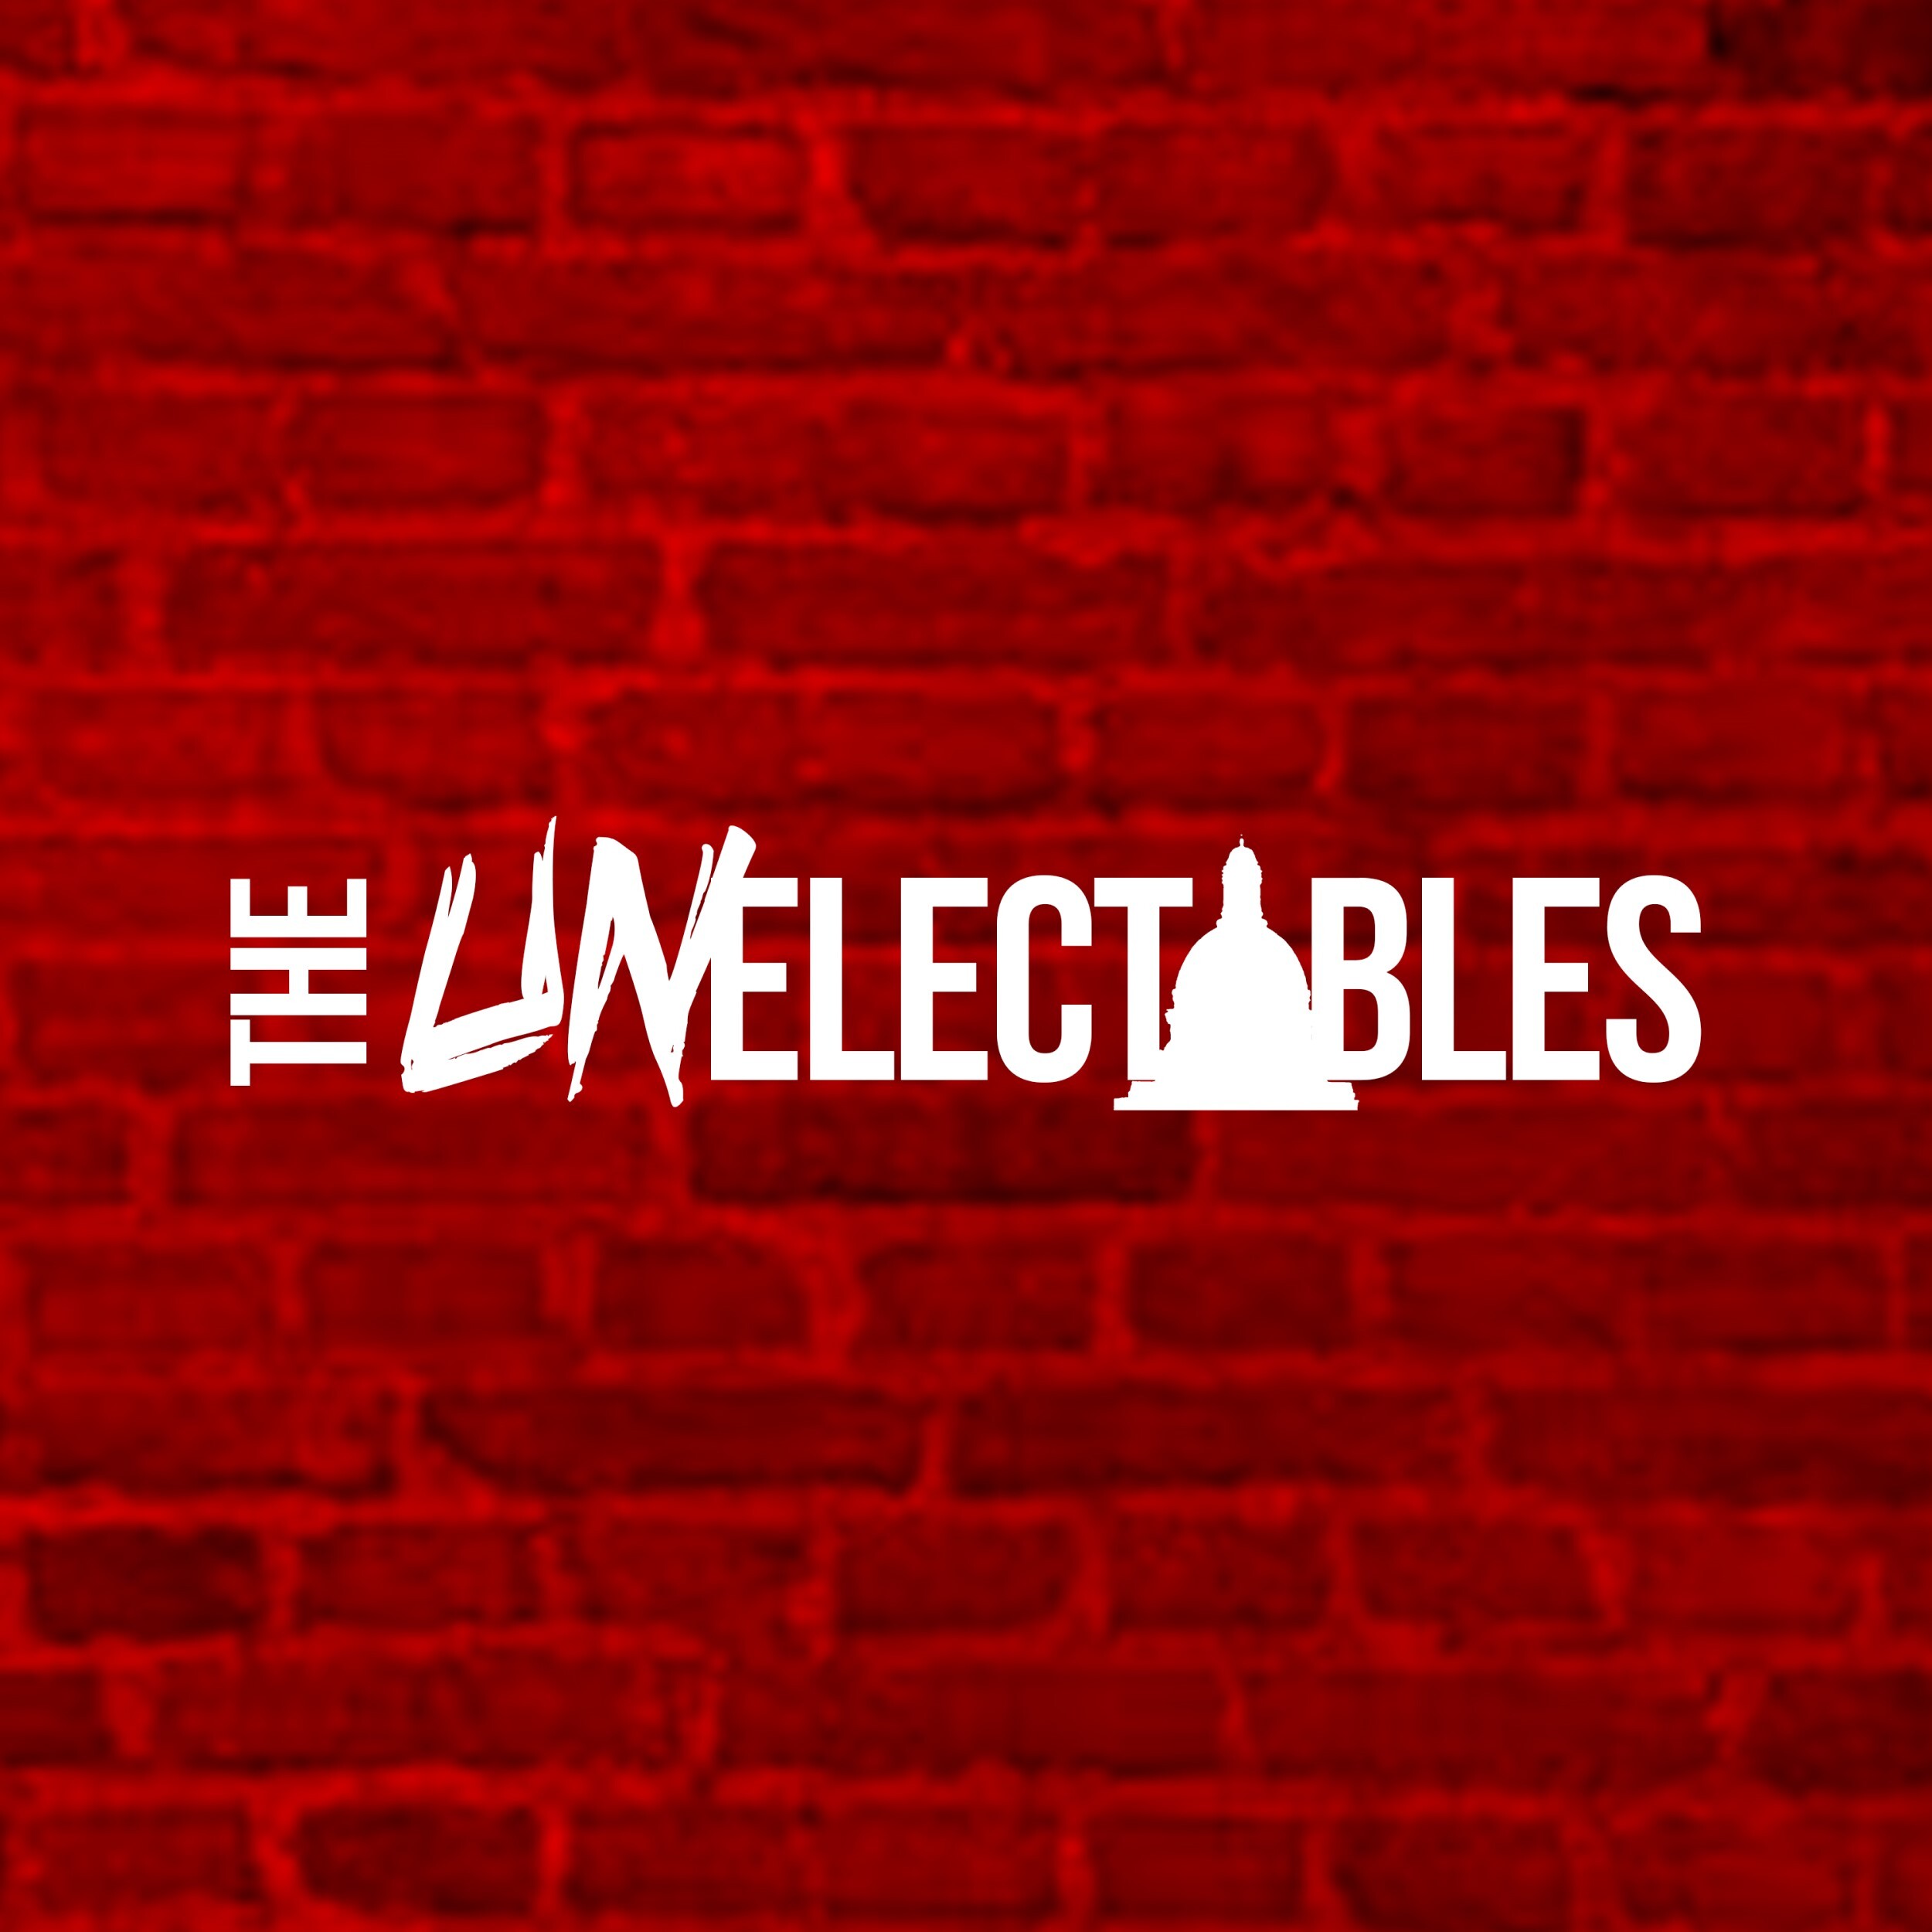 The Unelectables